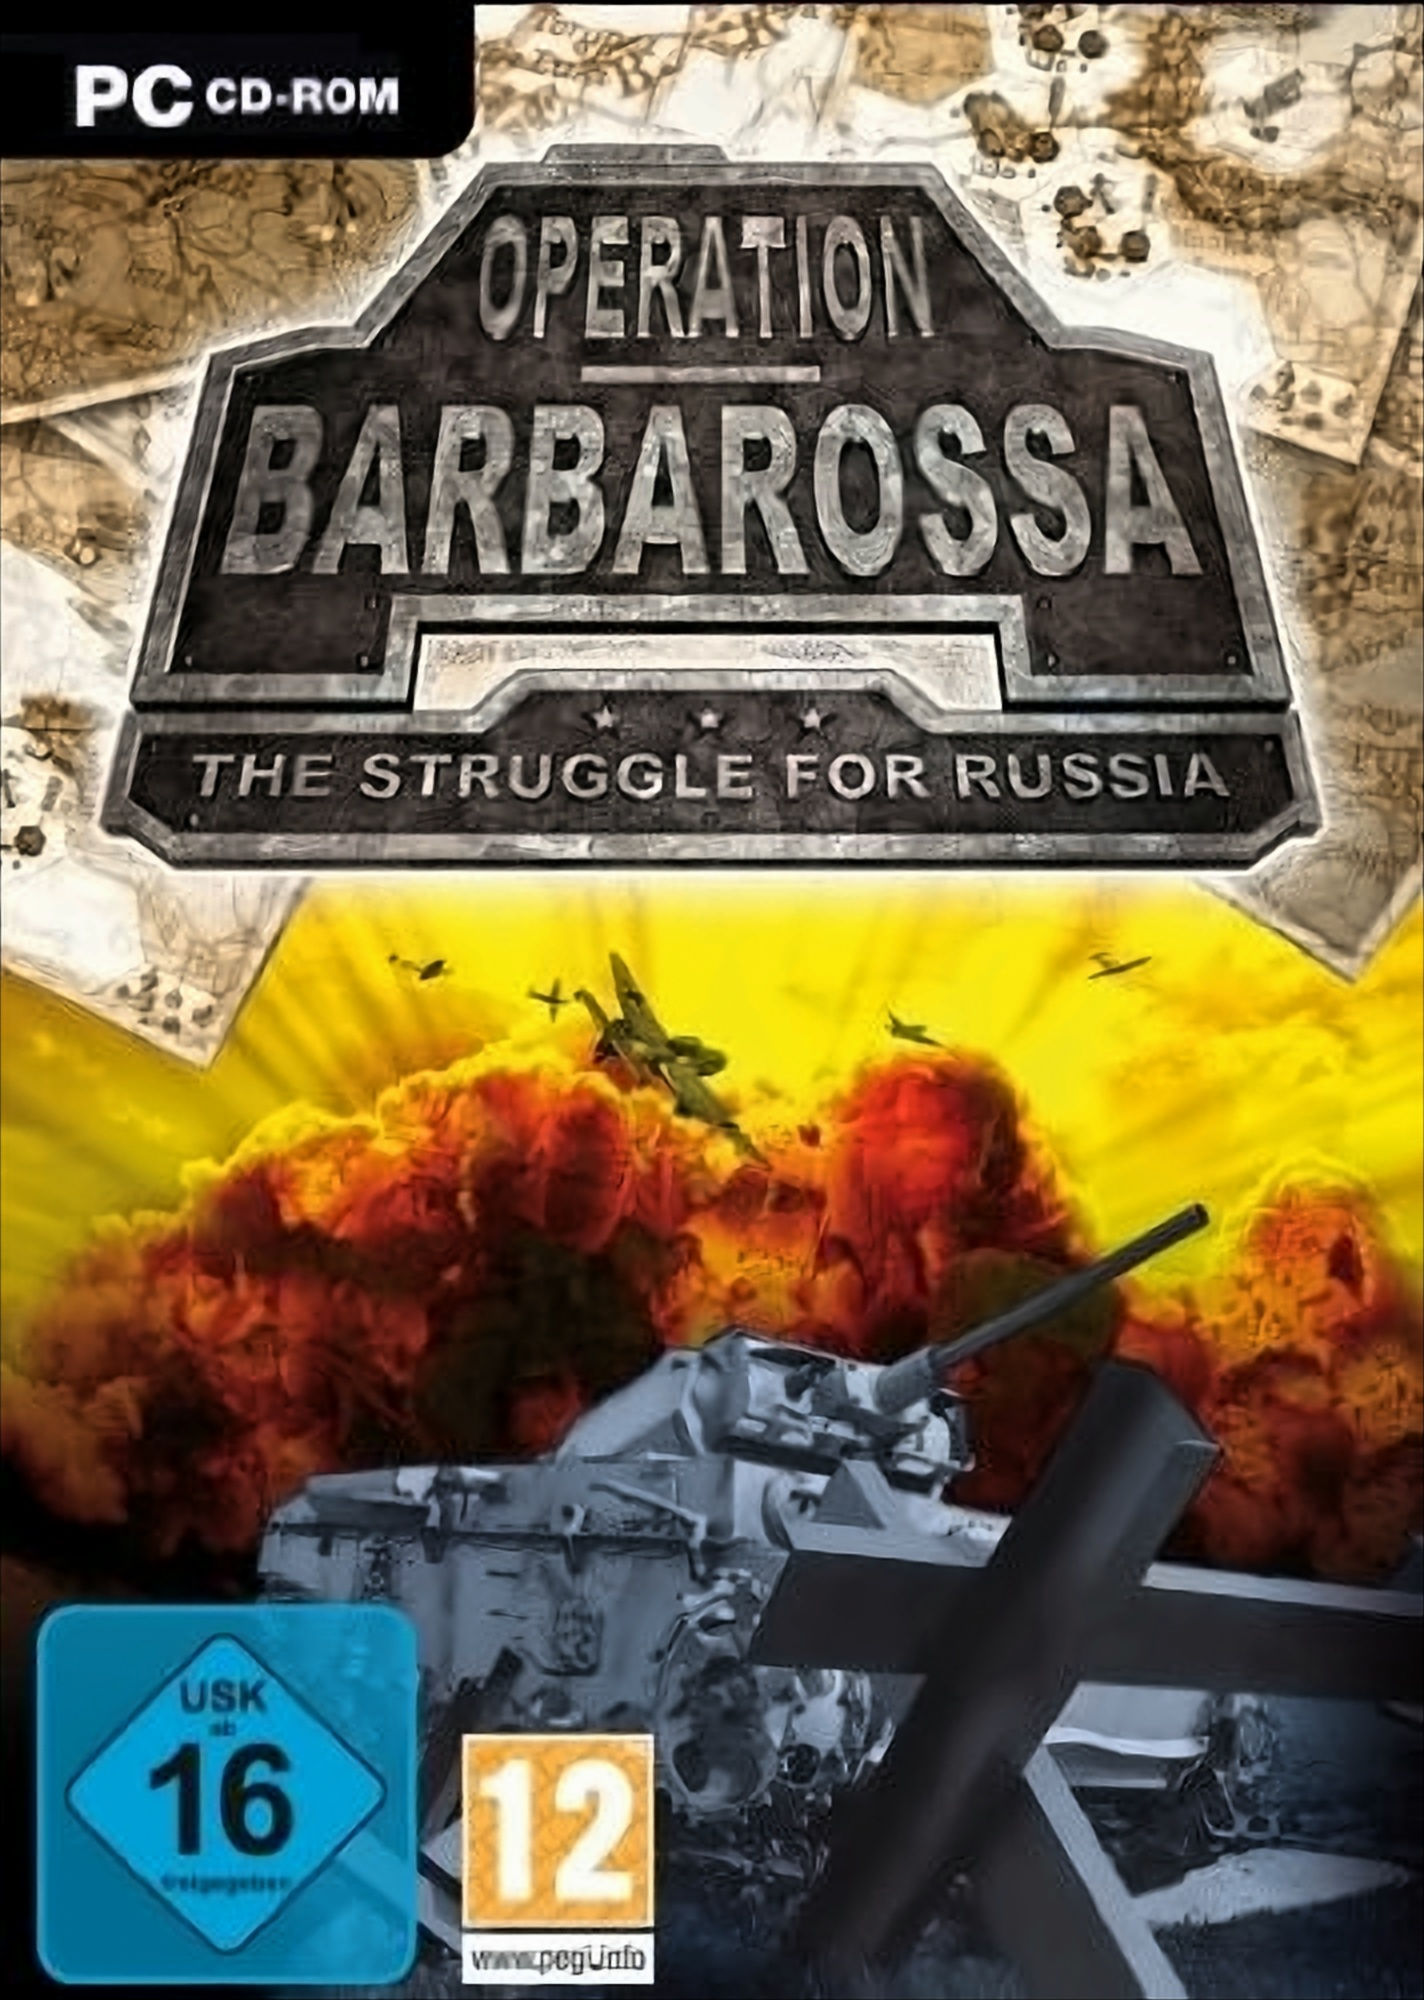 For [PC] The - Operation - Russia Barbarossa Struggle